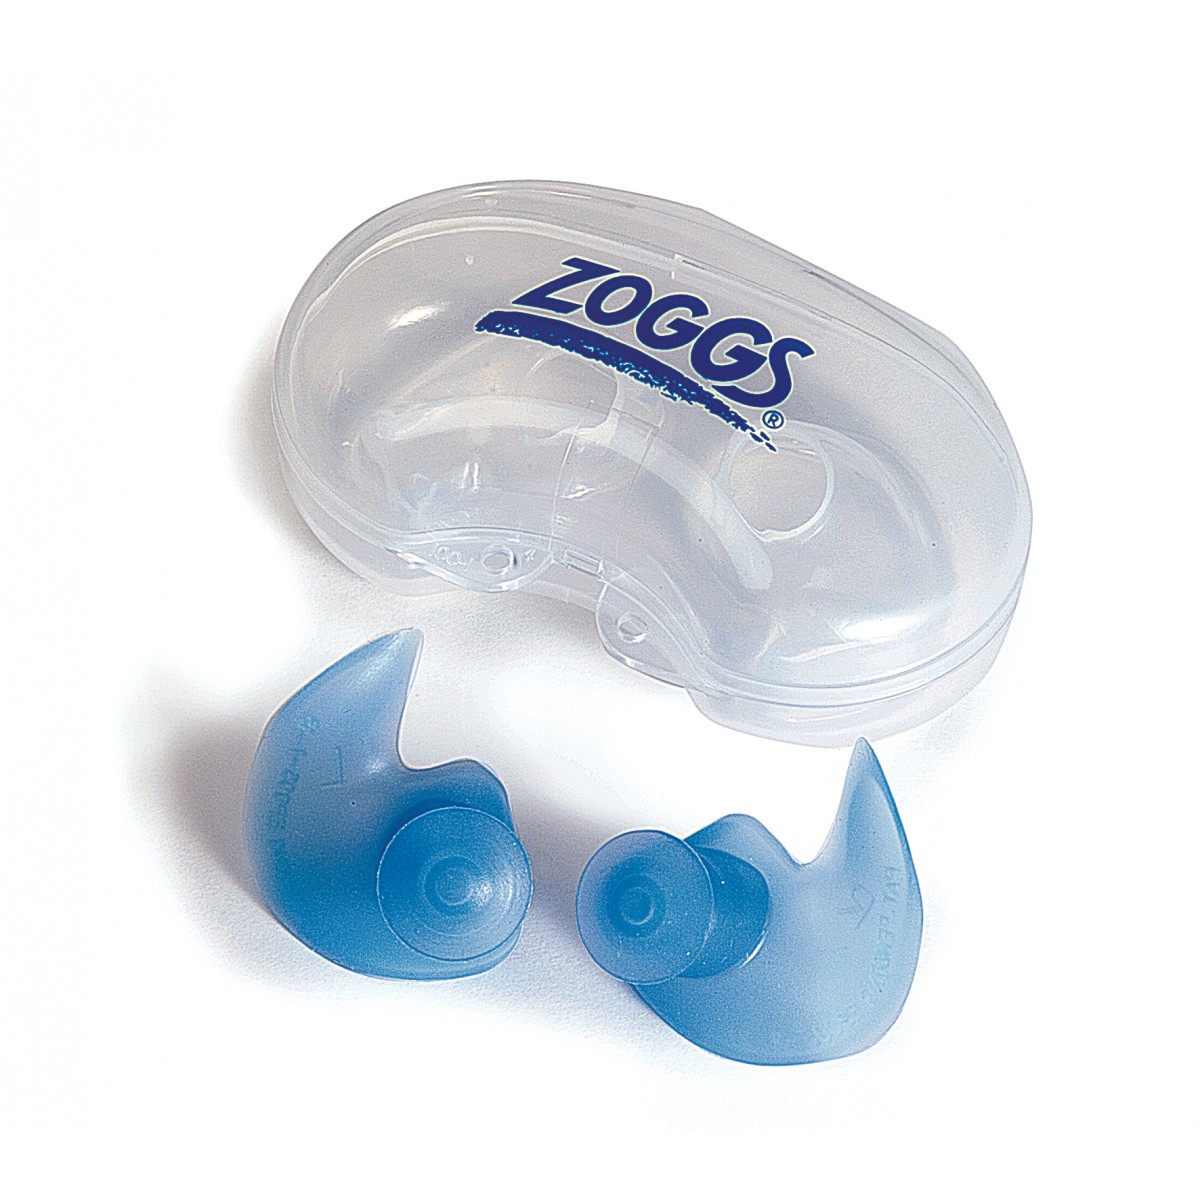 Zoggs Aqua Plugz